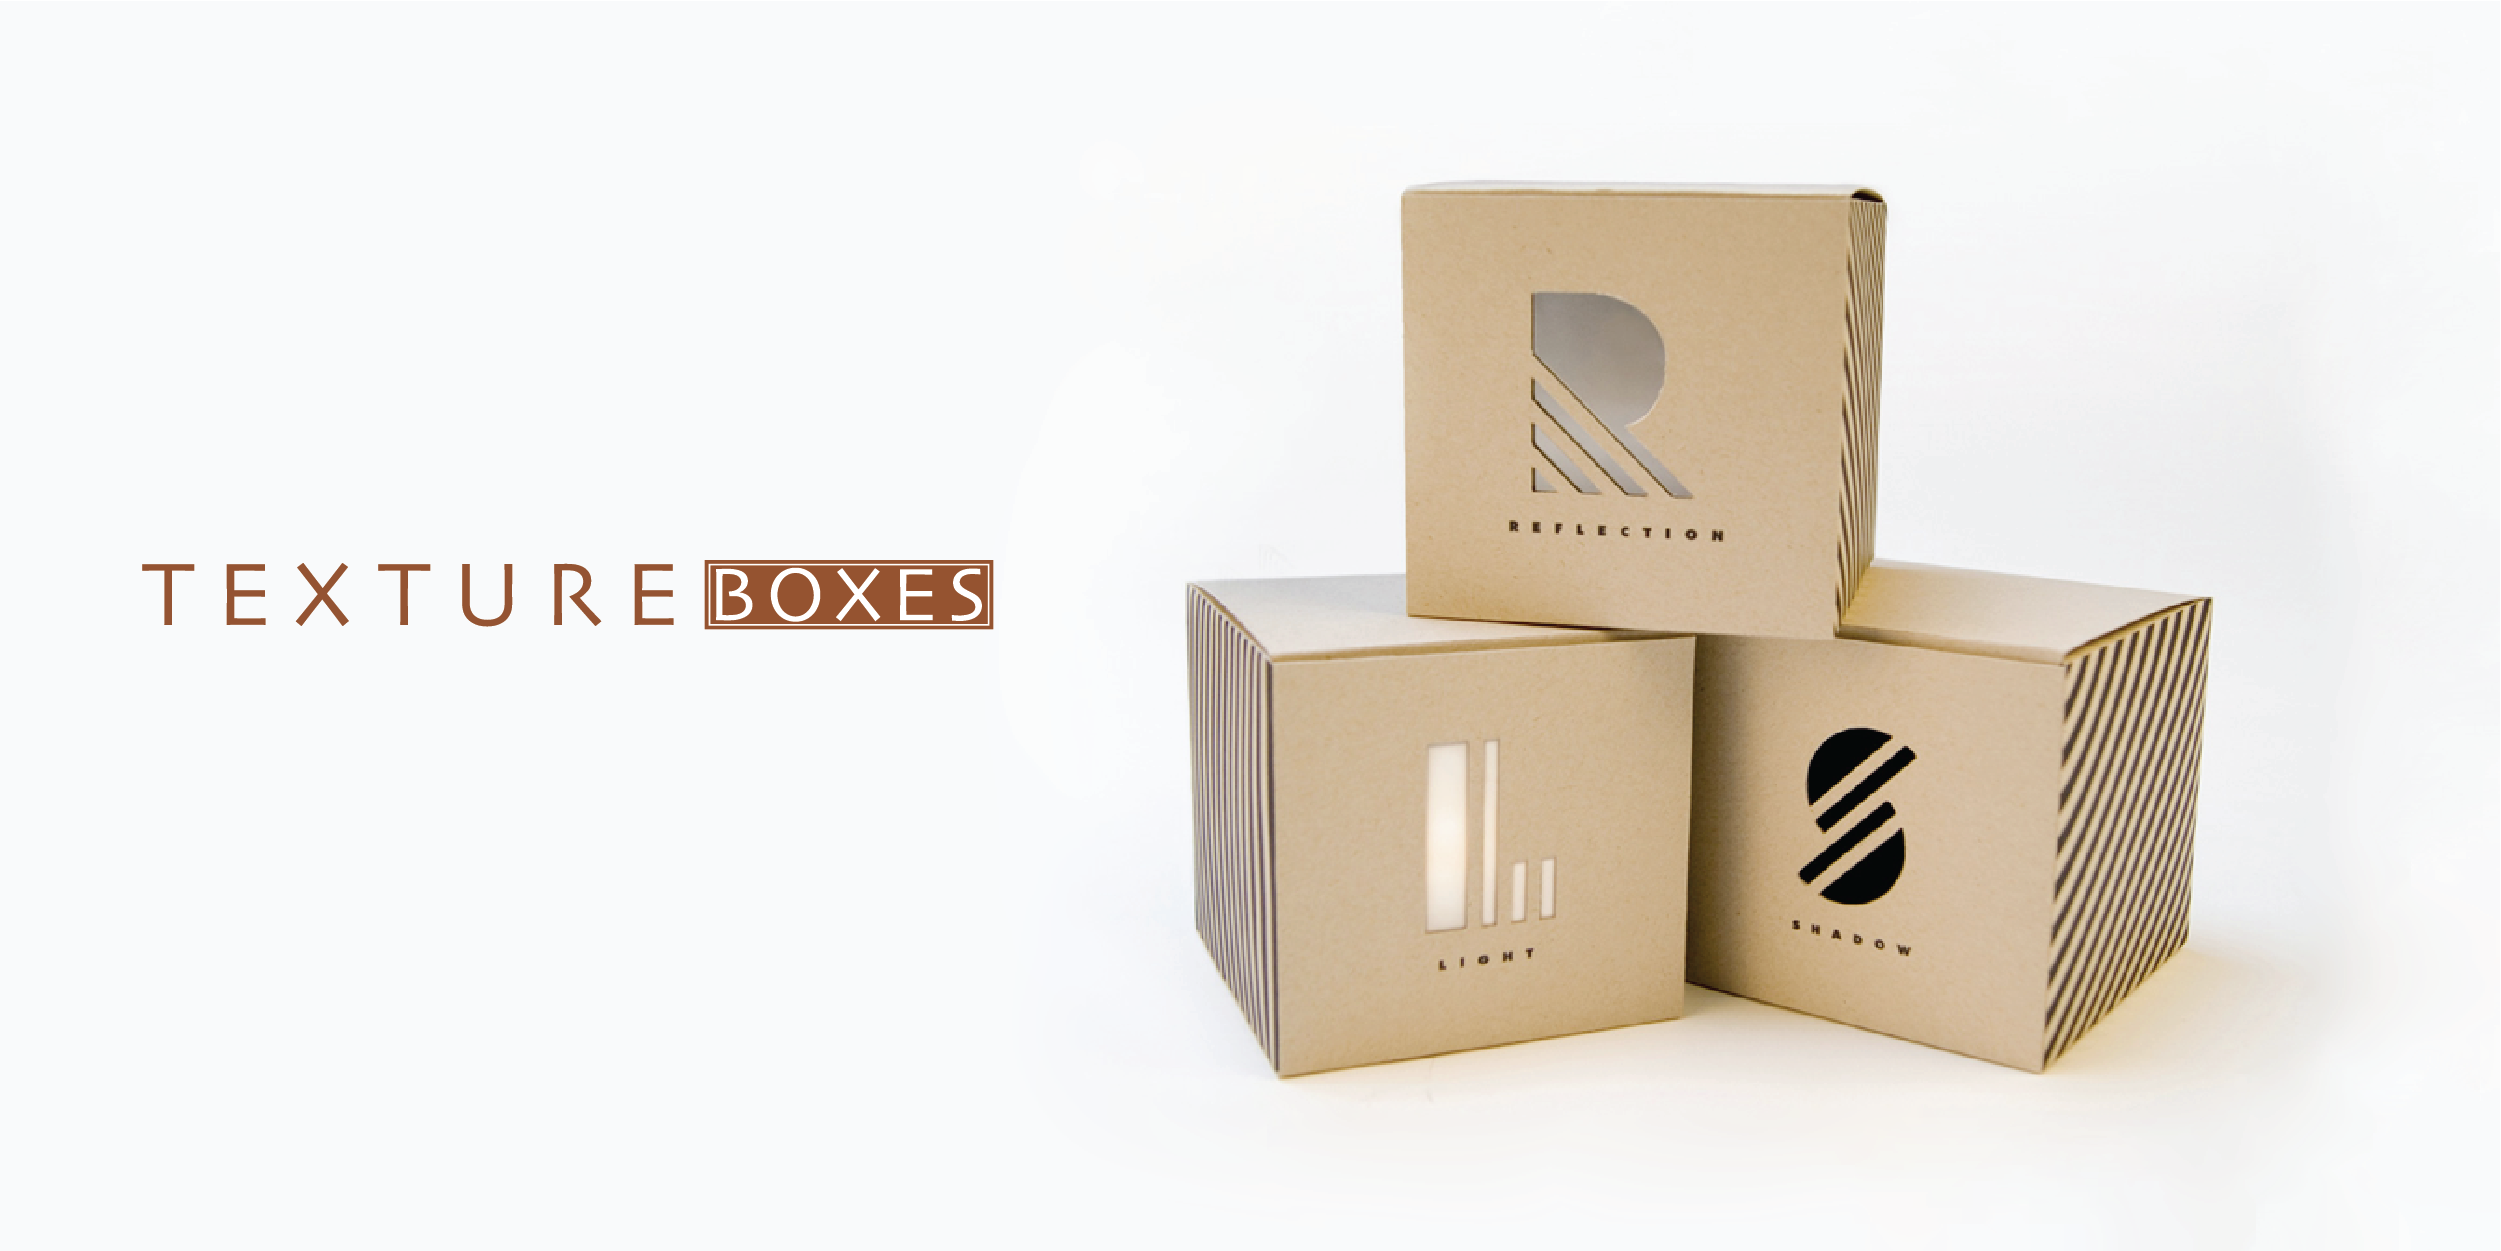 Texture Boxes